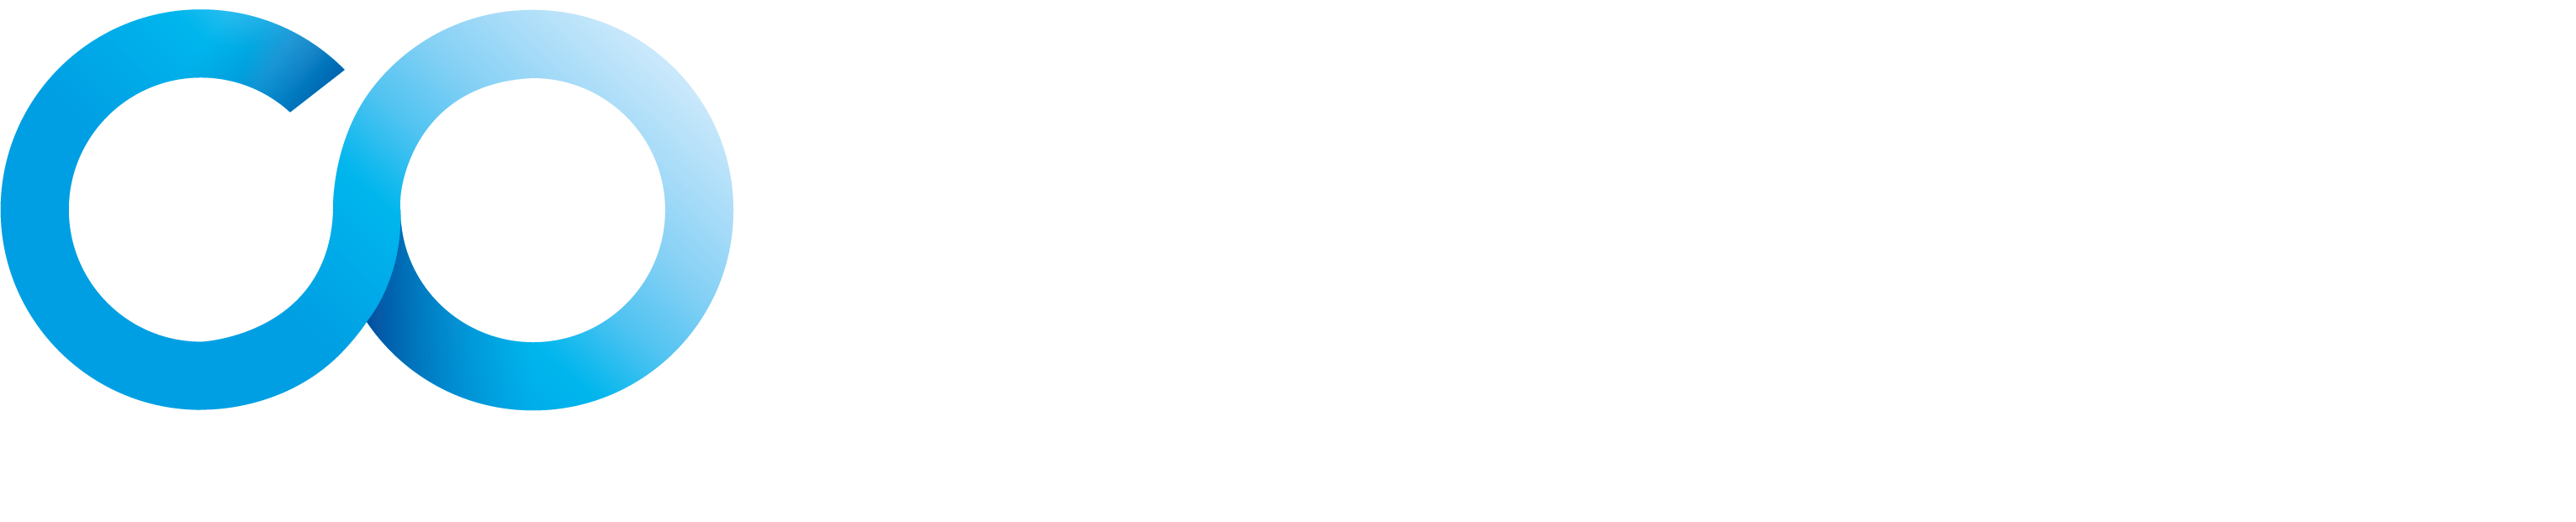 Co-Kinetic logo